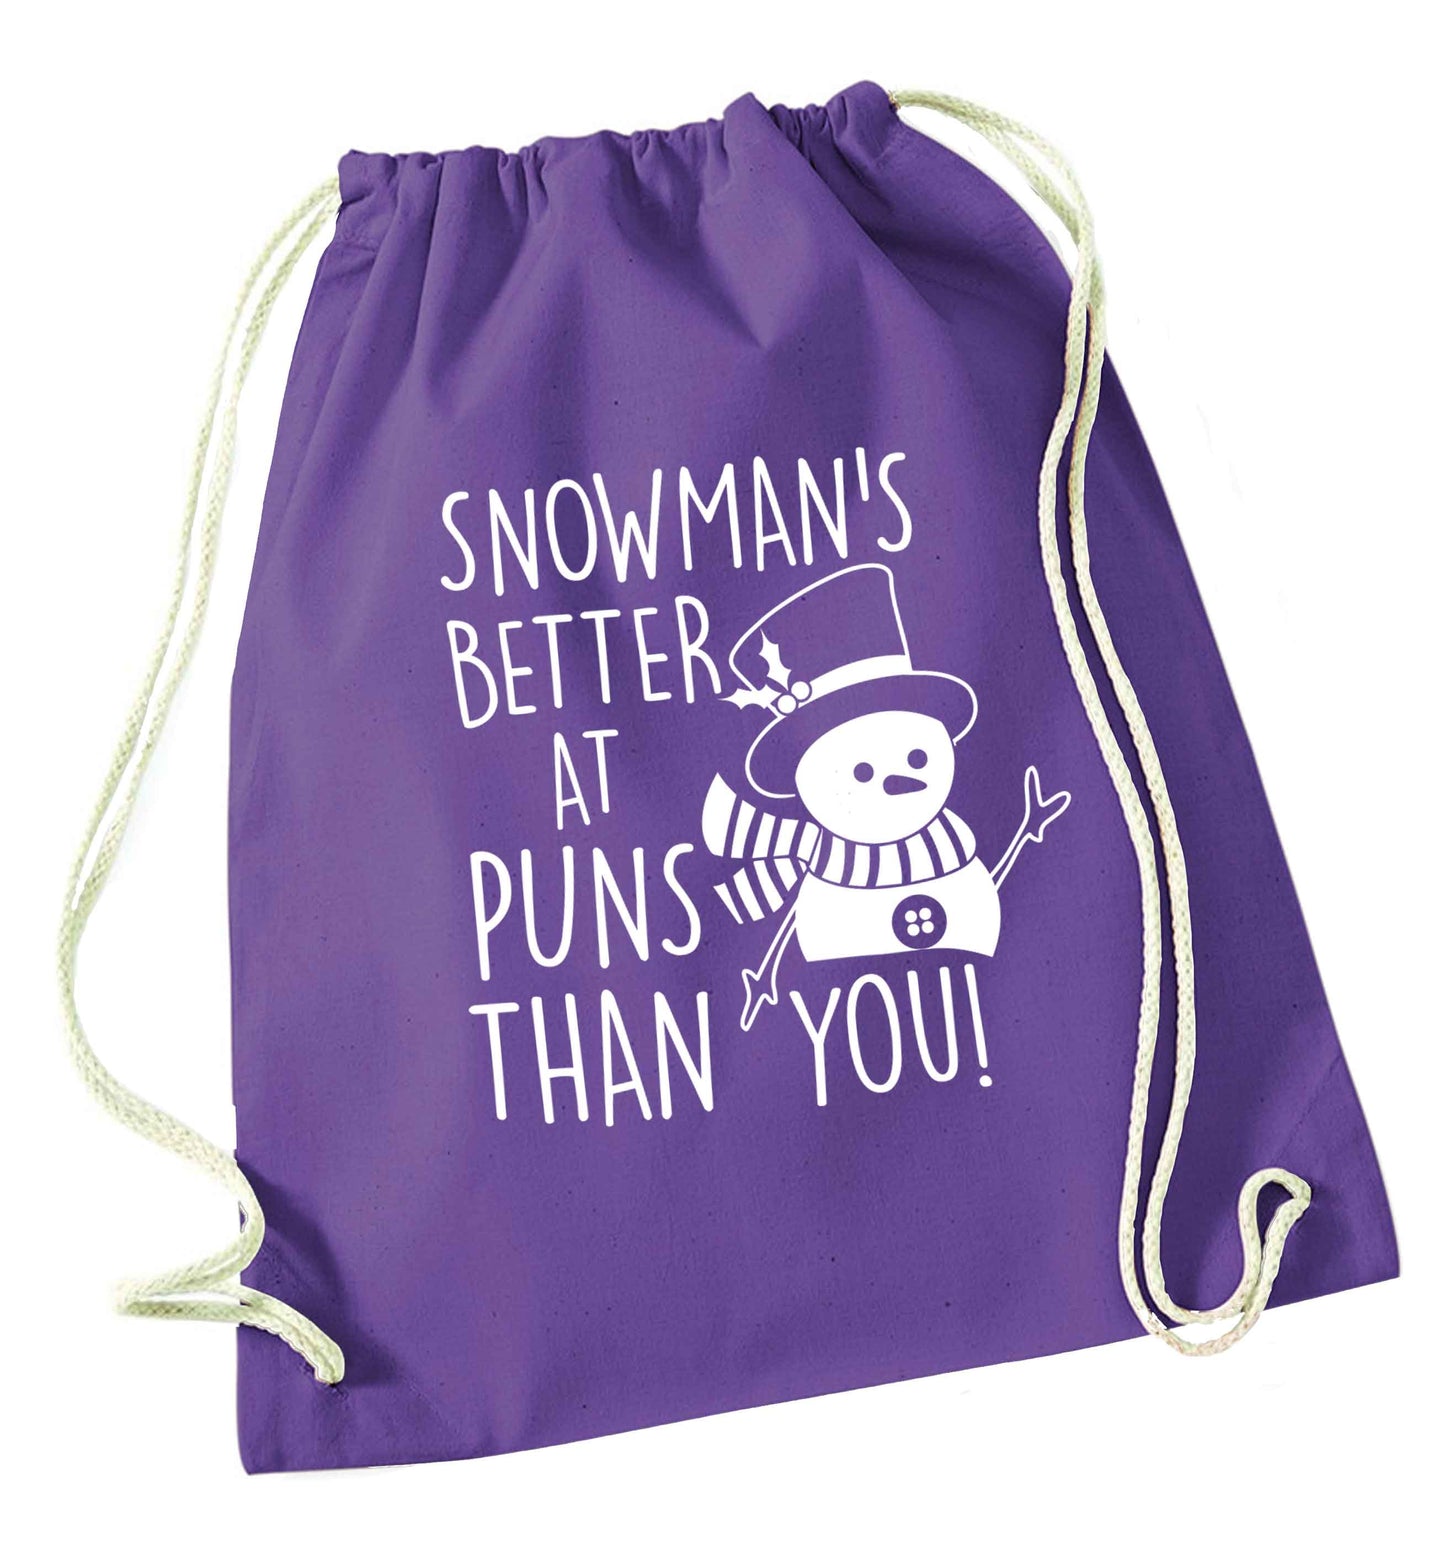 Snowman's Puns You purple drawstring bag